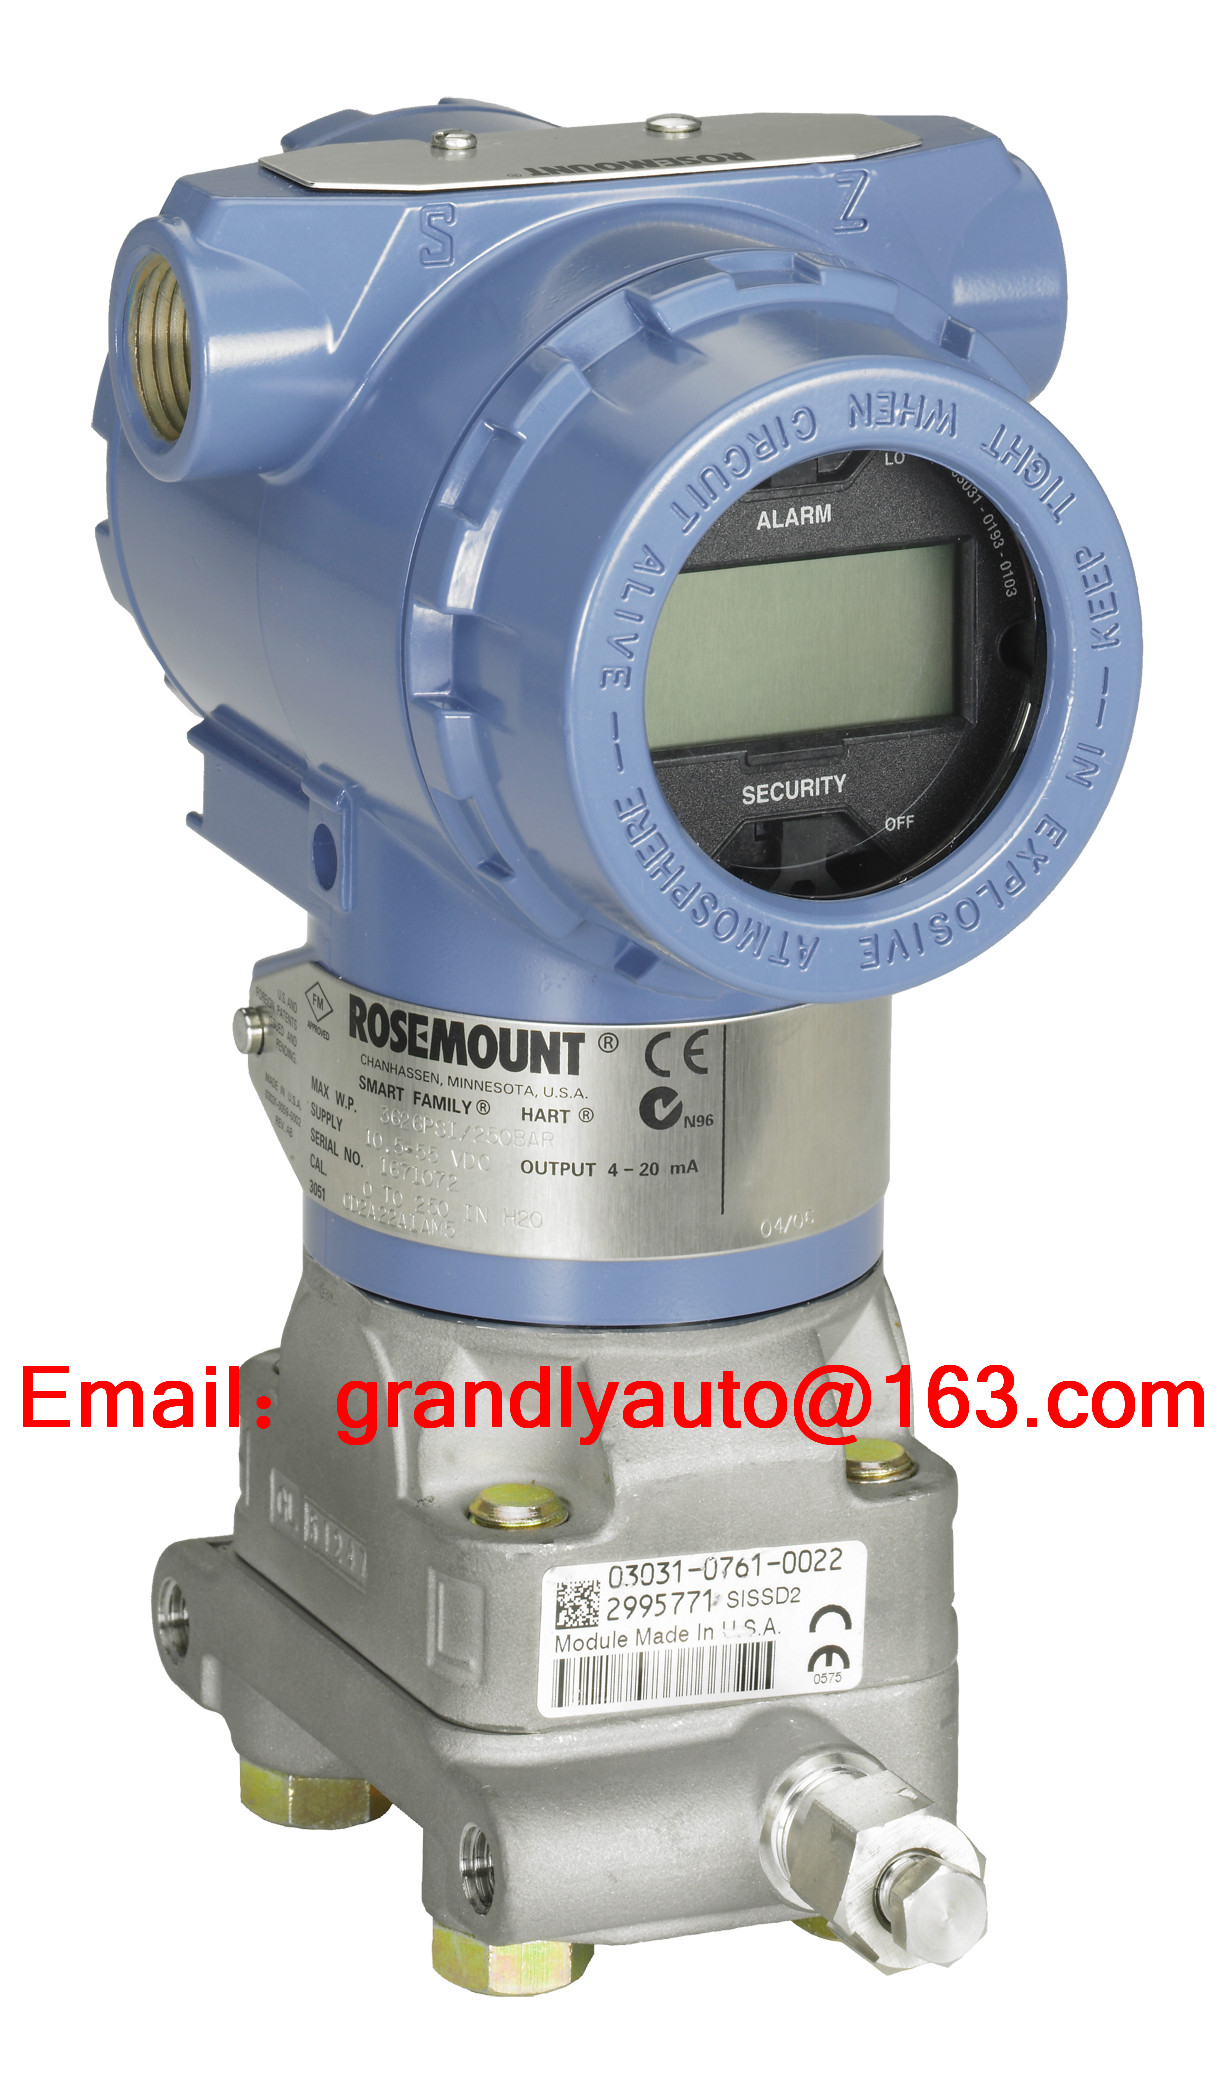 Factory New Rosemount 3051 Series Pressure Transmitter-Buy at Grandly Automation Ltd